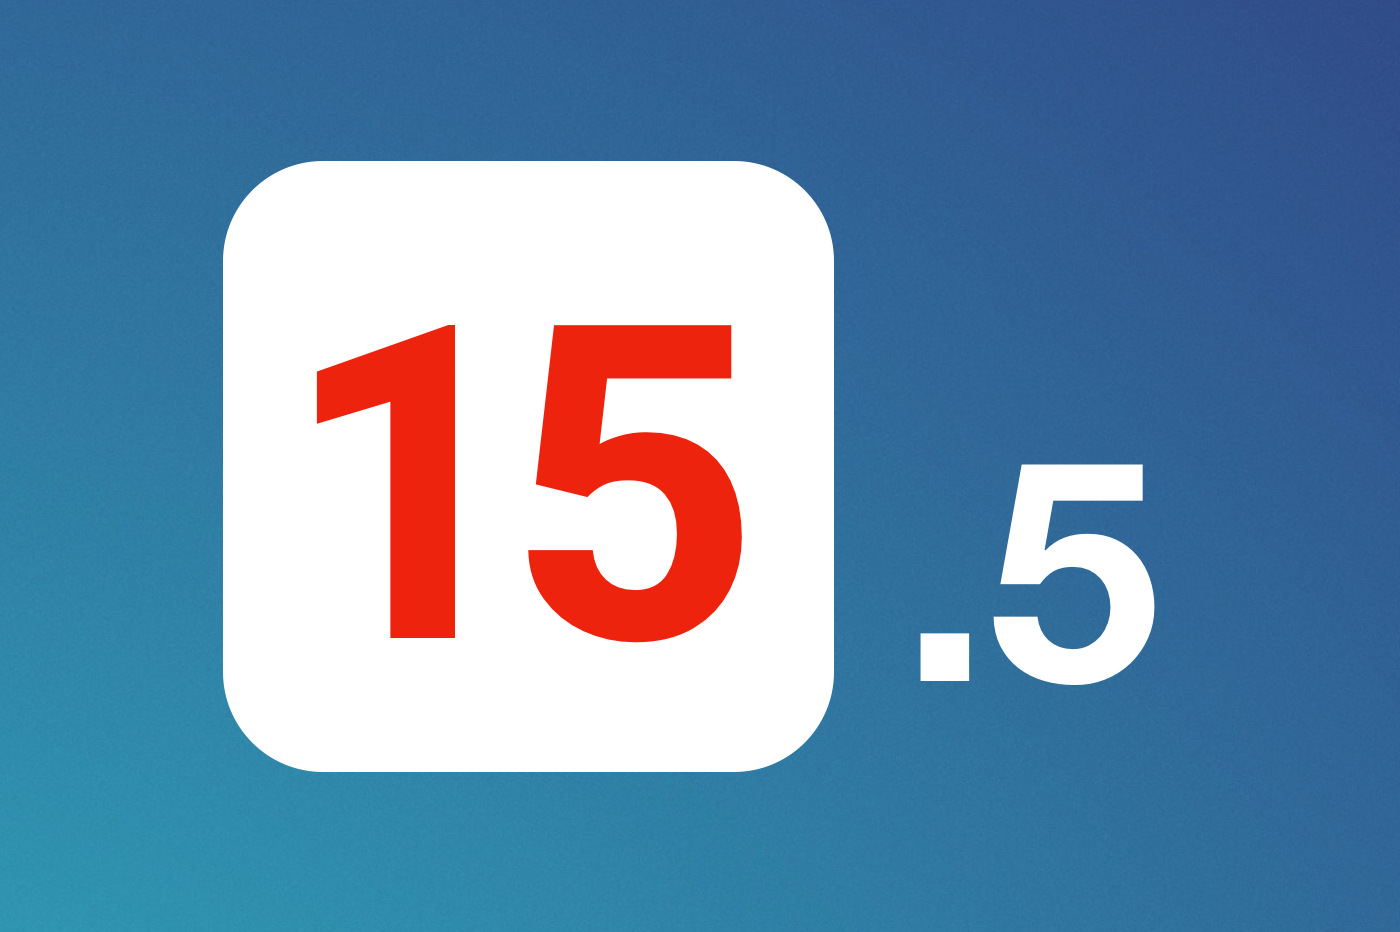 iOS 15.5 rouge bleu